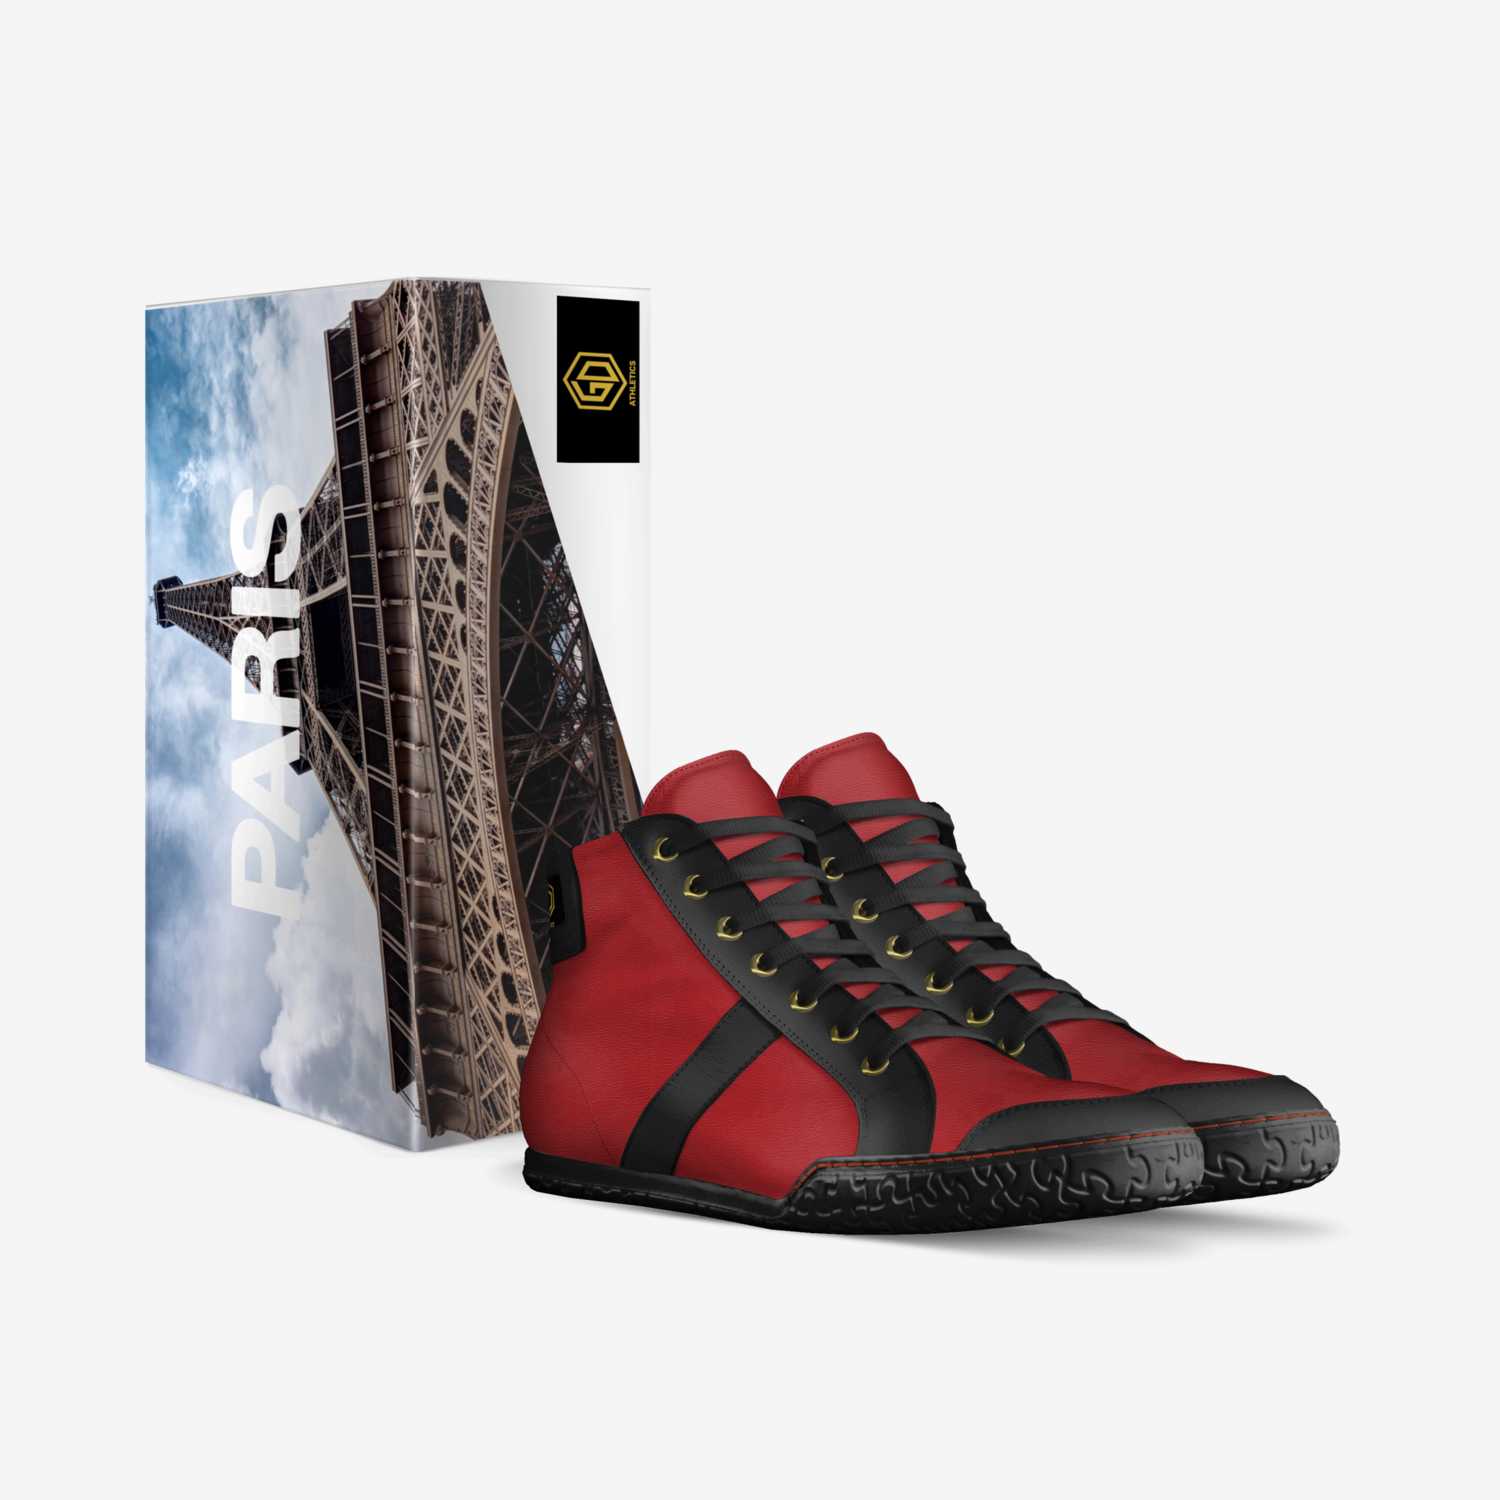 GD custom made in Italy shoes by Olando Gadner Destine | Box view